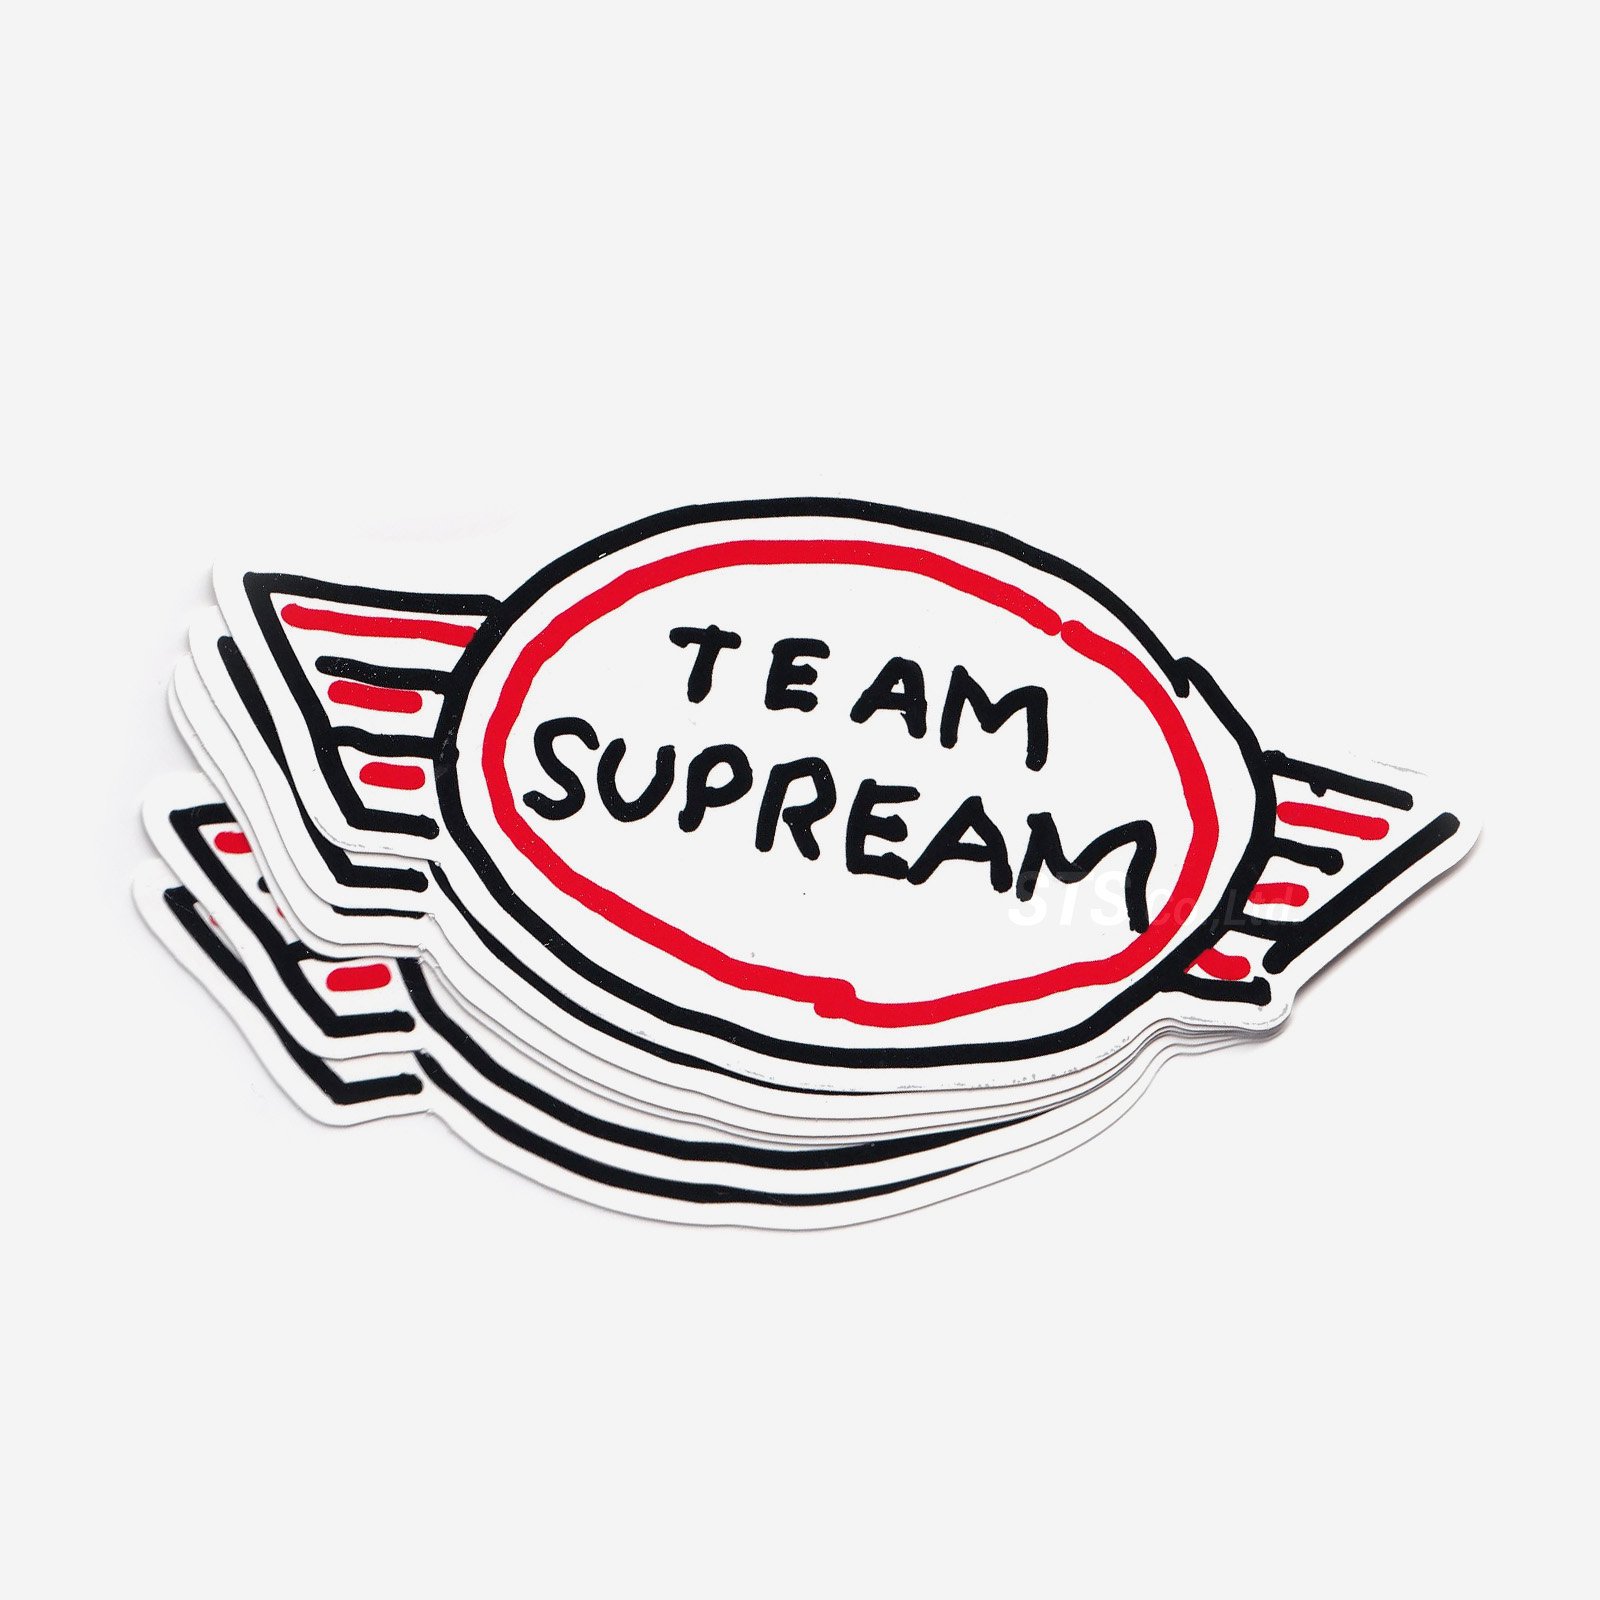 Supreme - Gonz Portrait Sticker | Team SUPREAMのロゴがステッカーで